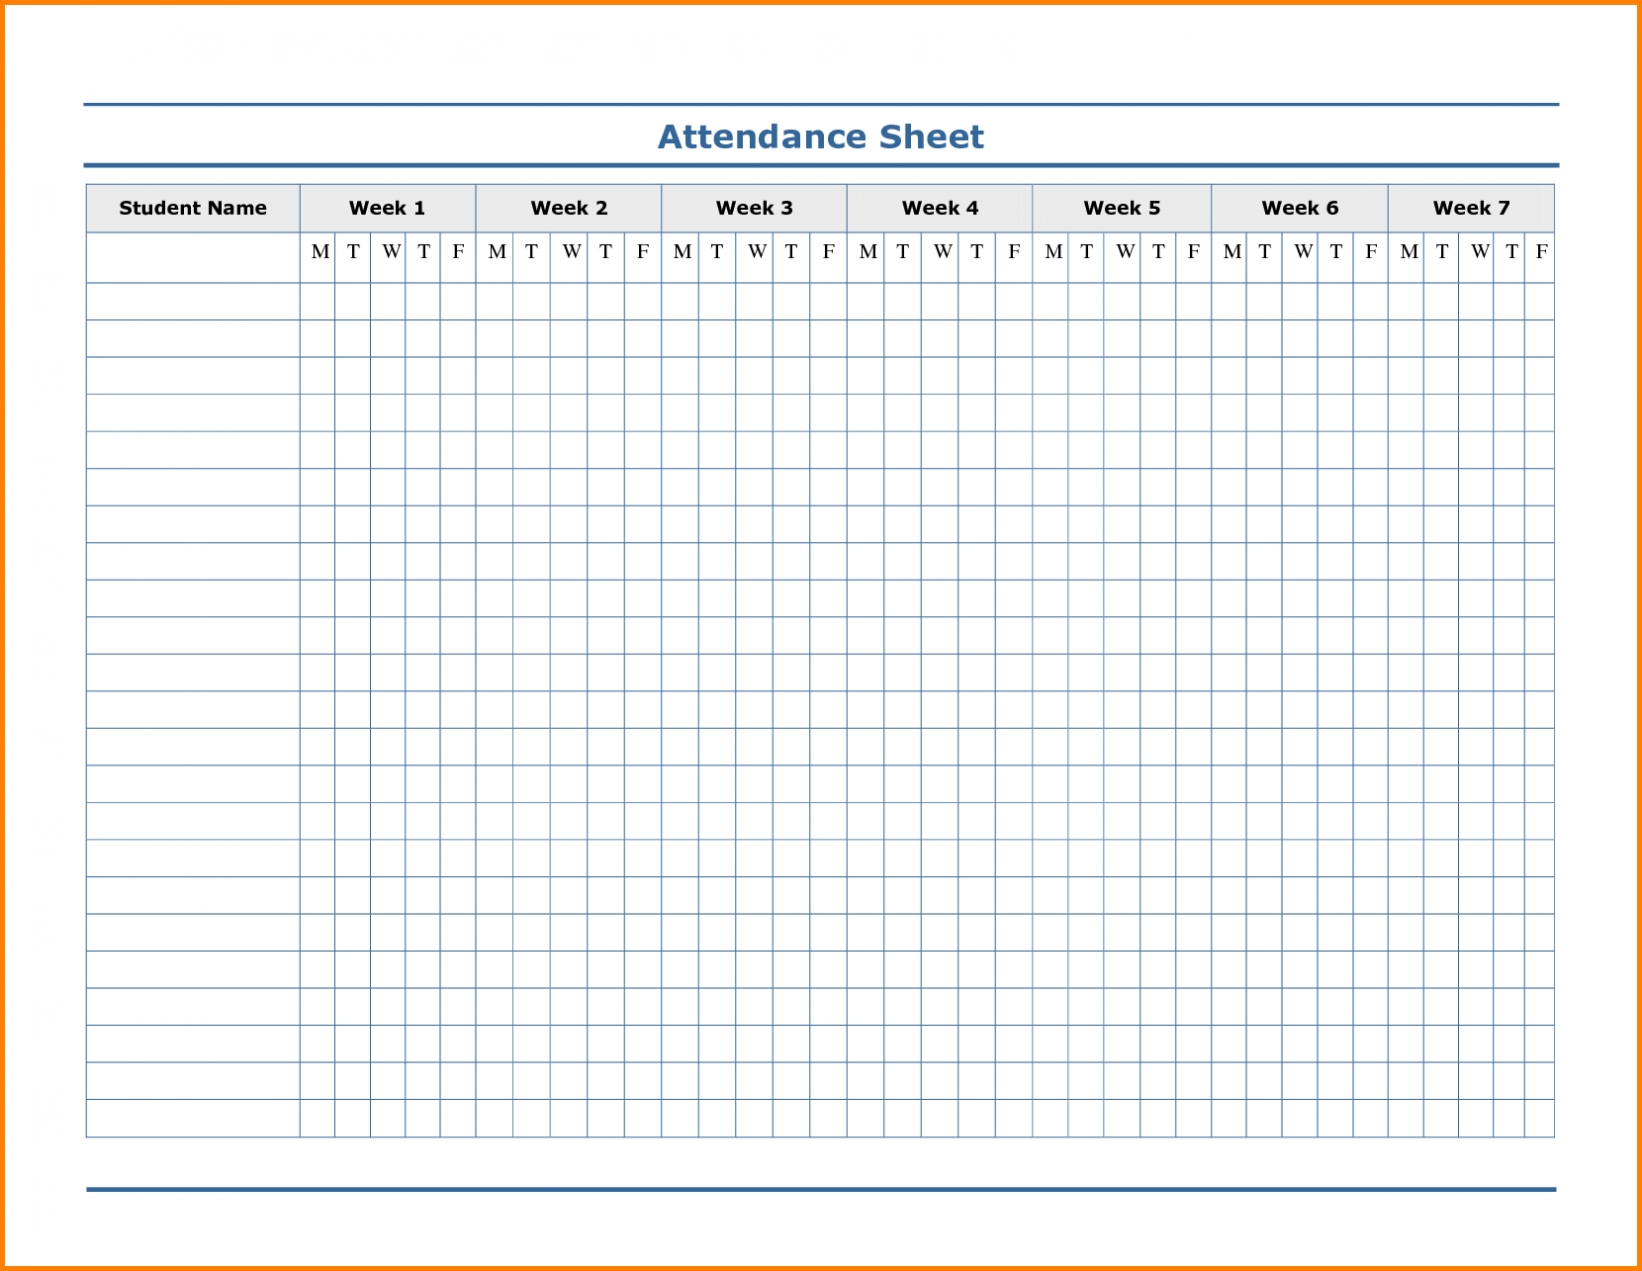 Free Printable Employee Attendance Sheet Pdf, Word, Excel-2020 Employee Attendance Tracker Template Free